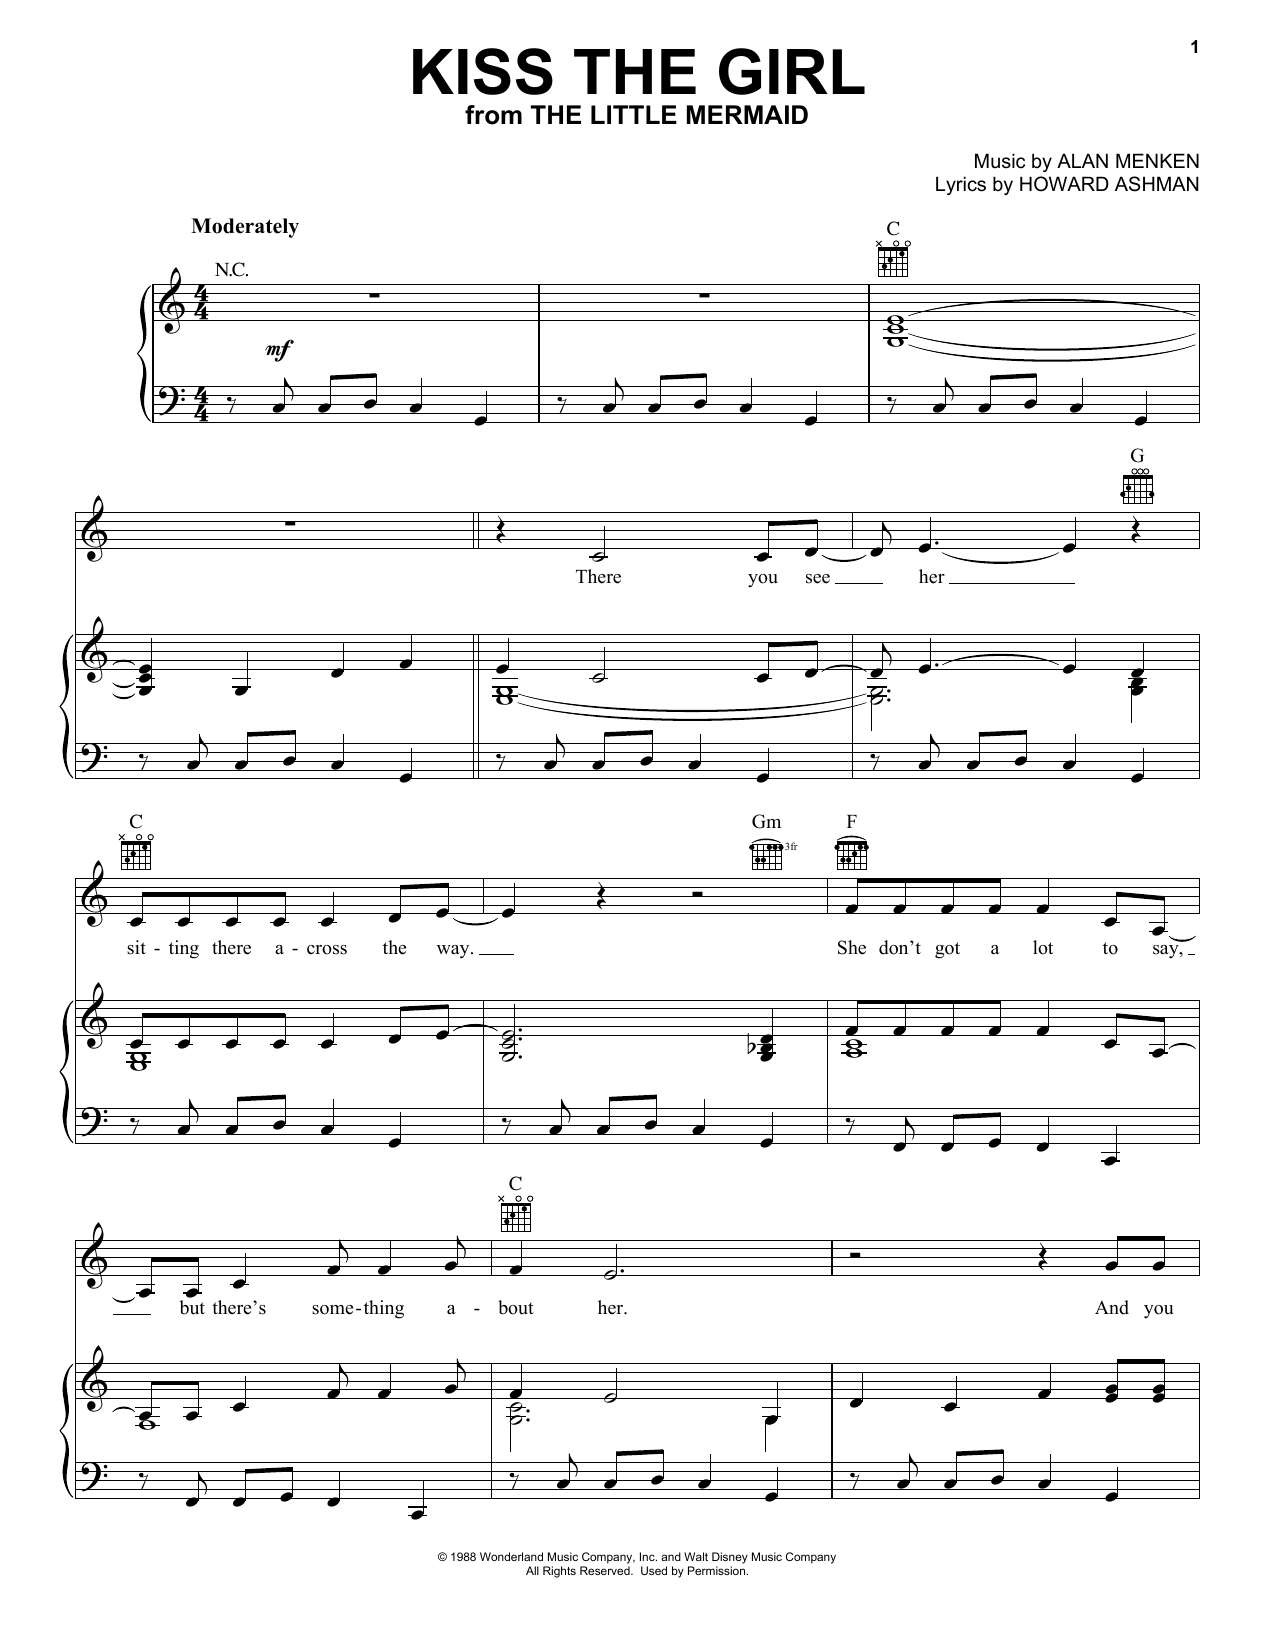 Download Alan Menken & Howard Ashman Kiss The Girl Sheet Music and learn how to play Trombone PDF digital score in minutes